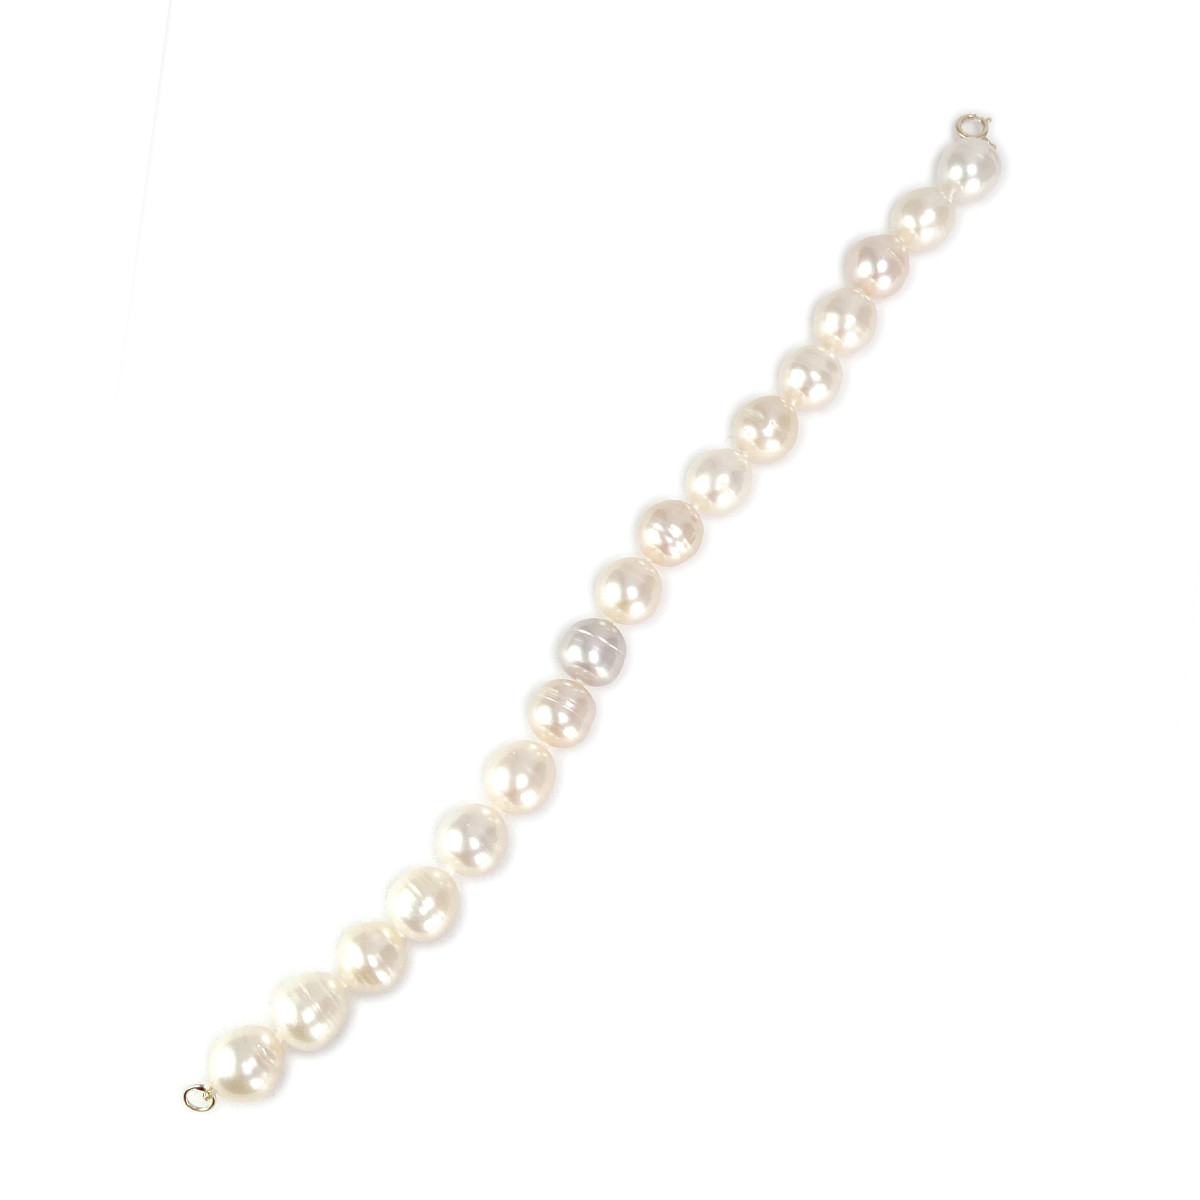 Bracelet d'occasion or 750 jaune perles de Chine 19 cm - vue 2